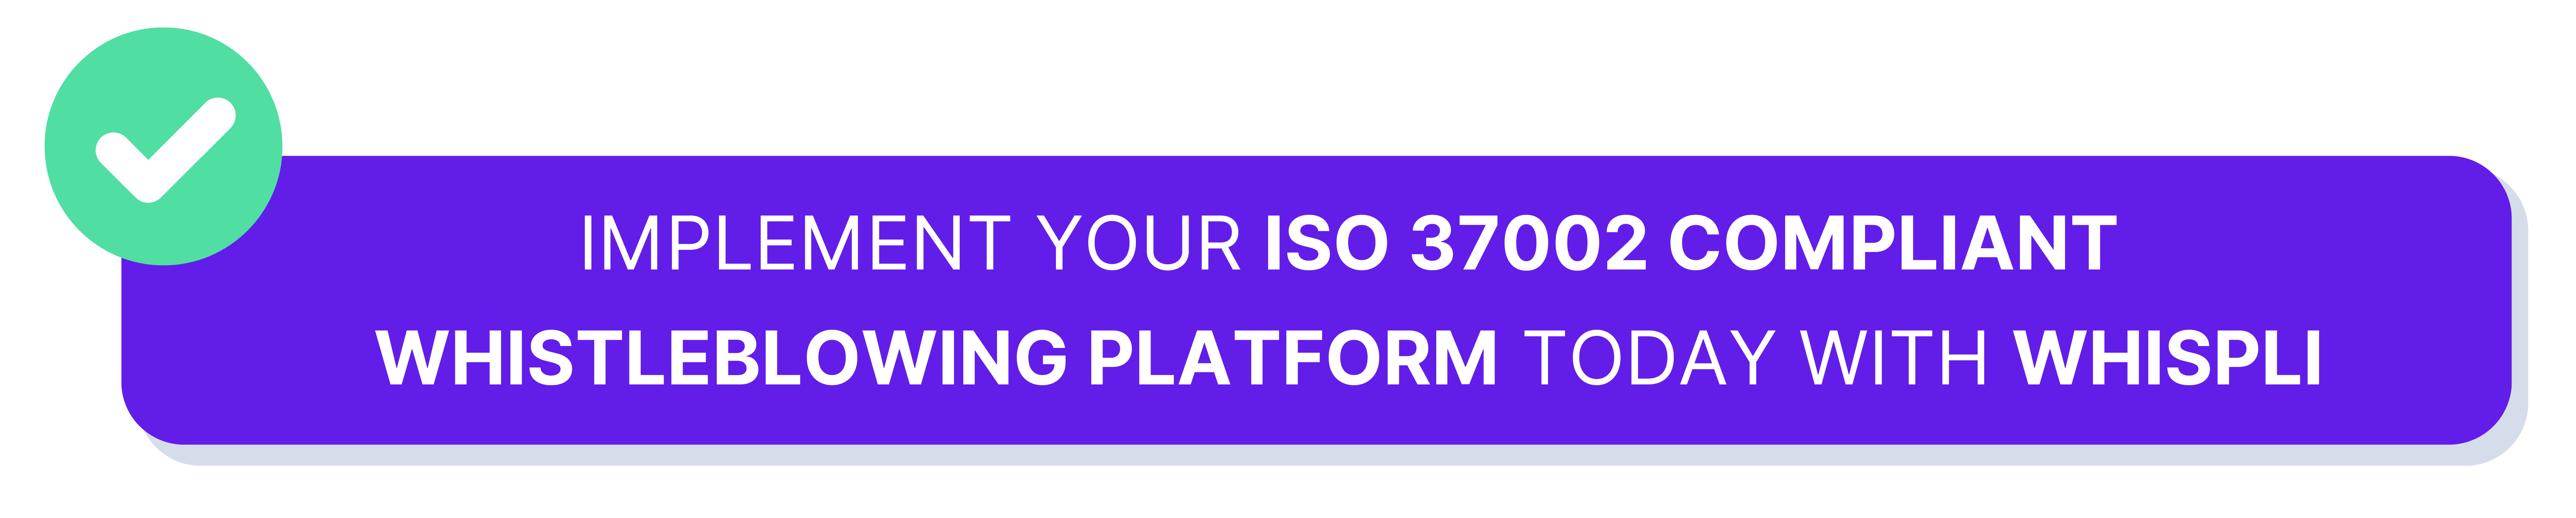 CTA iso37002 compliant wb platform